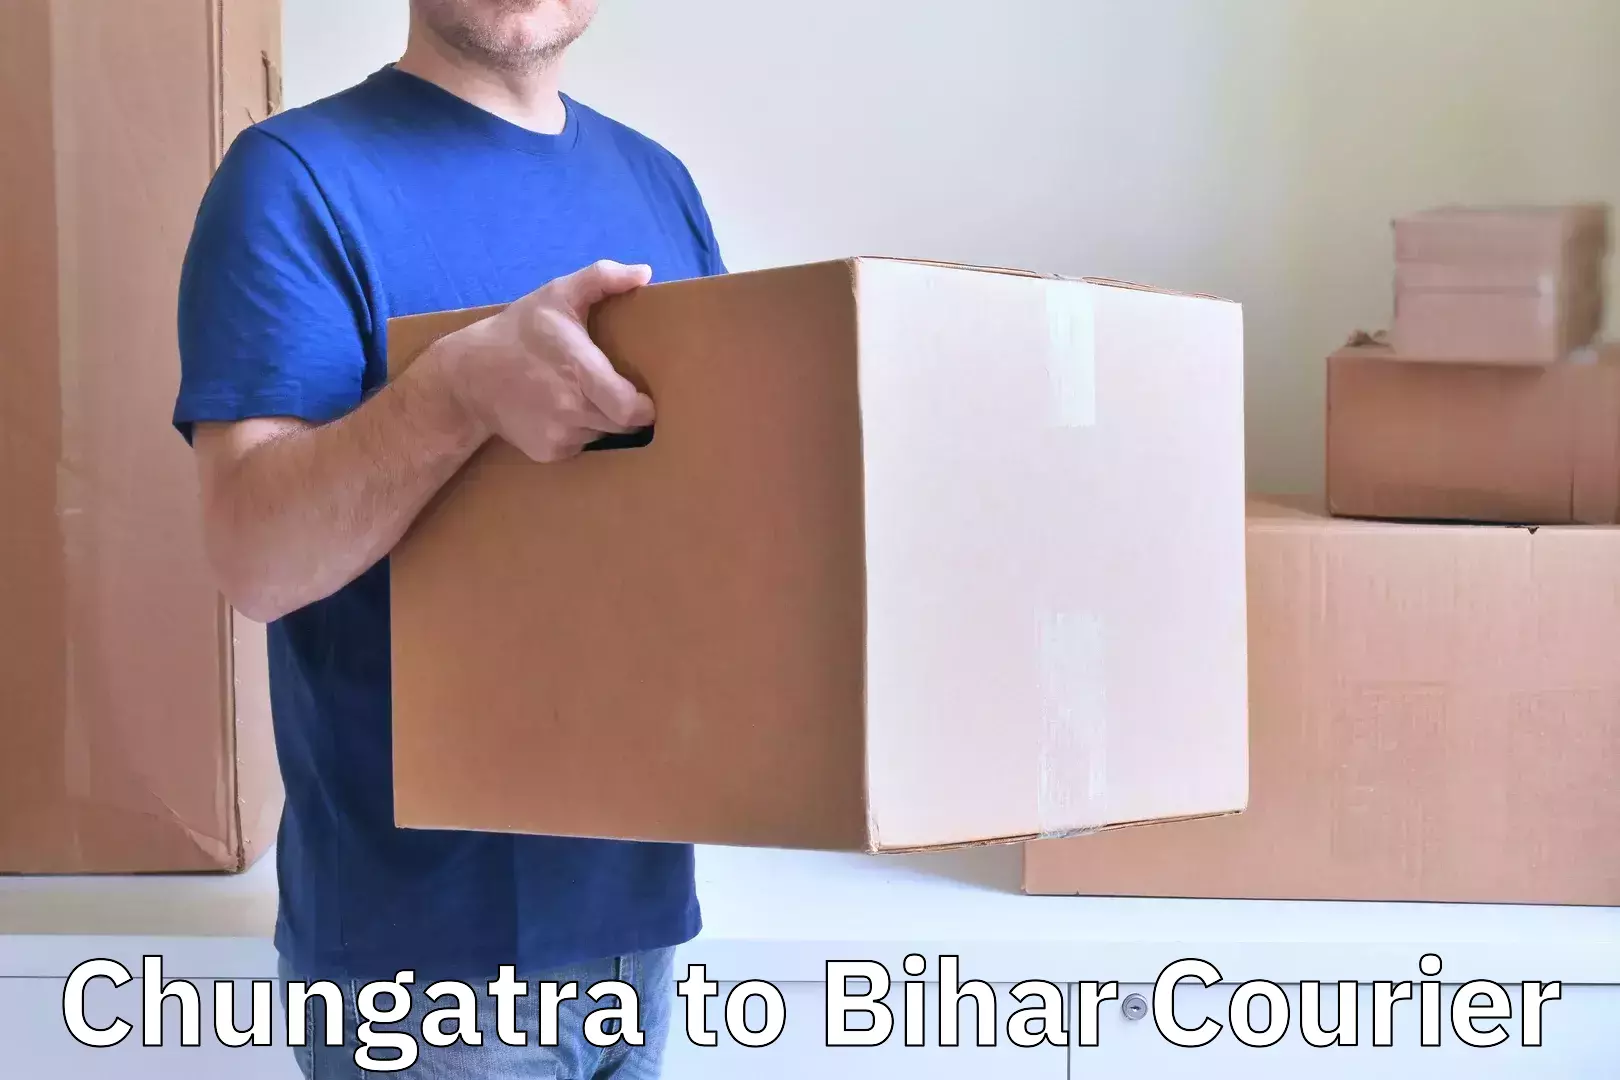 Baggage transport calculator Chungatra to Bihar